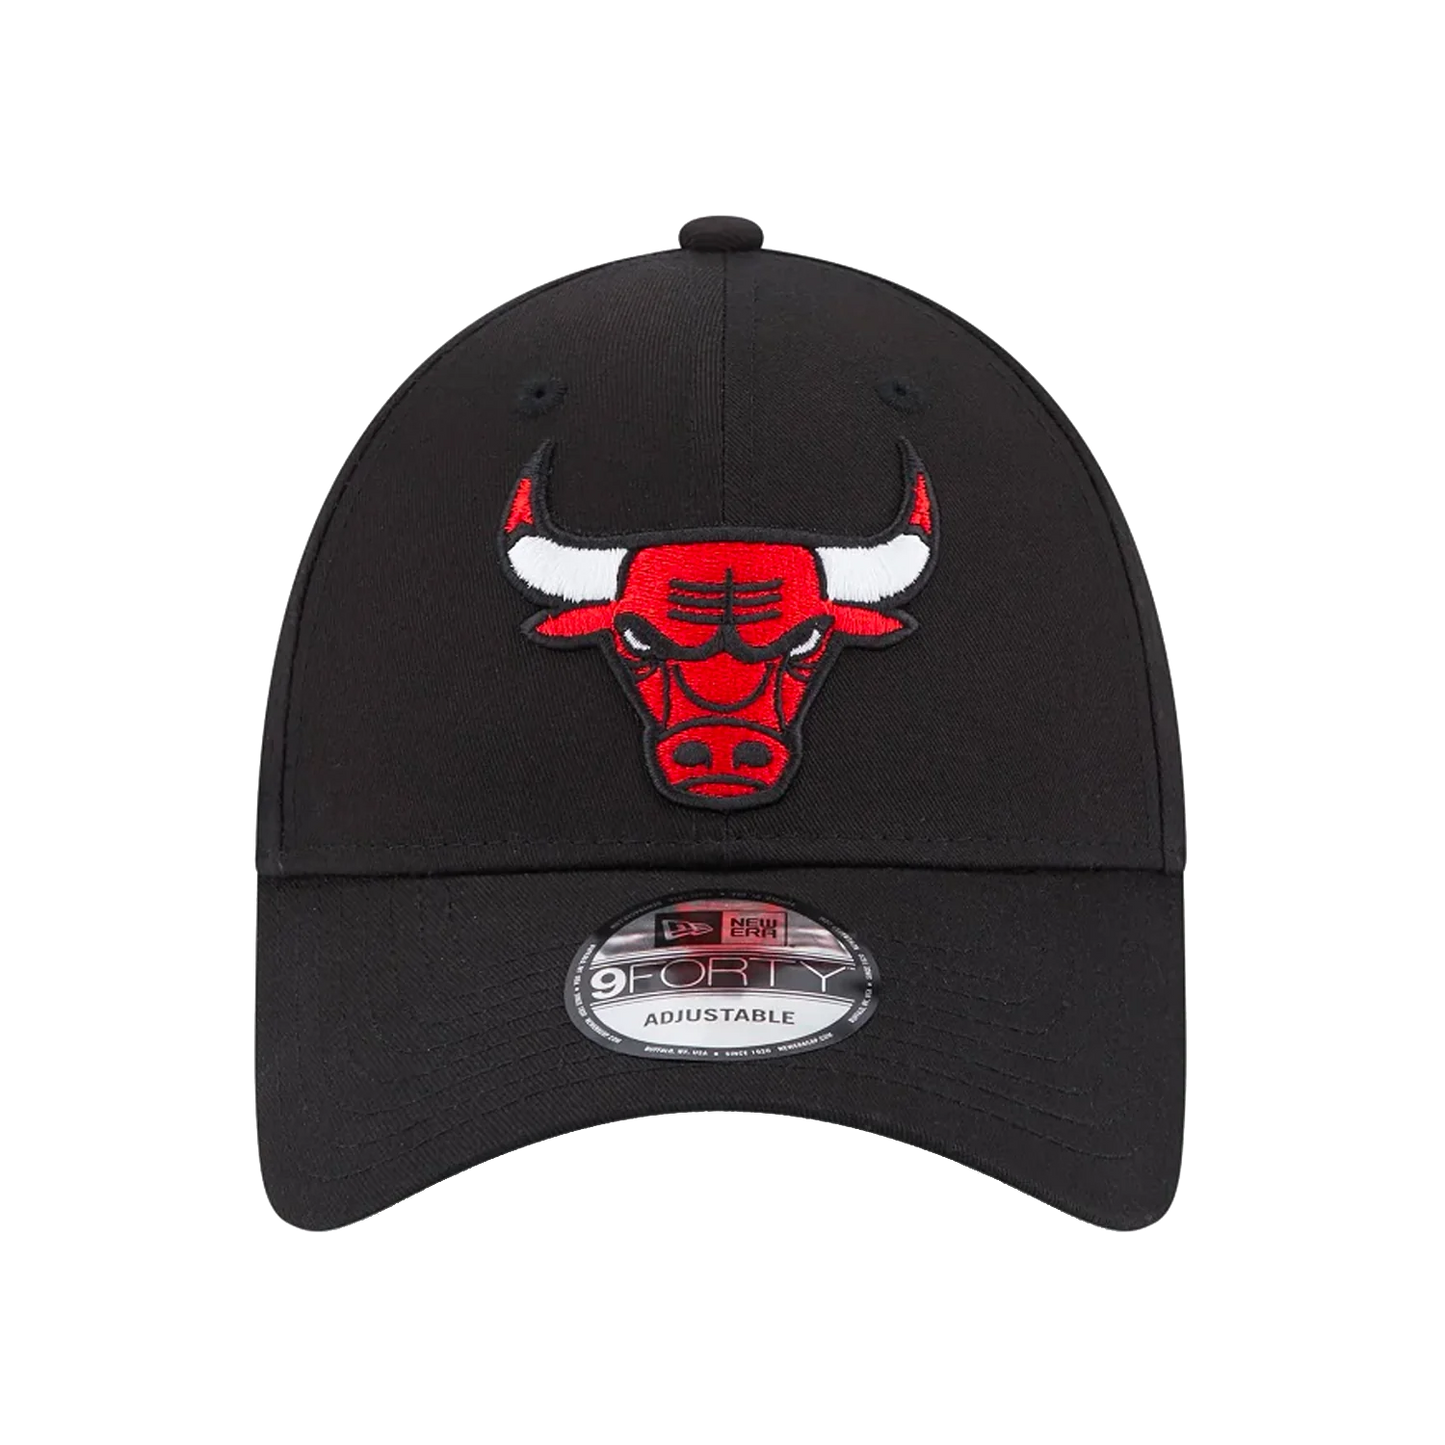 NEW ERA Chicago Bulls 9FORTY Strapback Cap - Black/Team